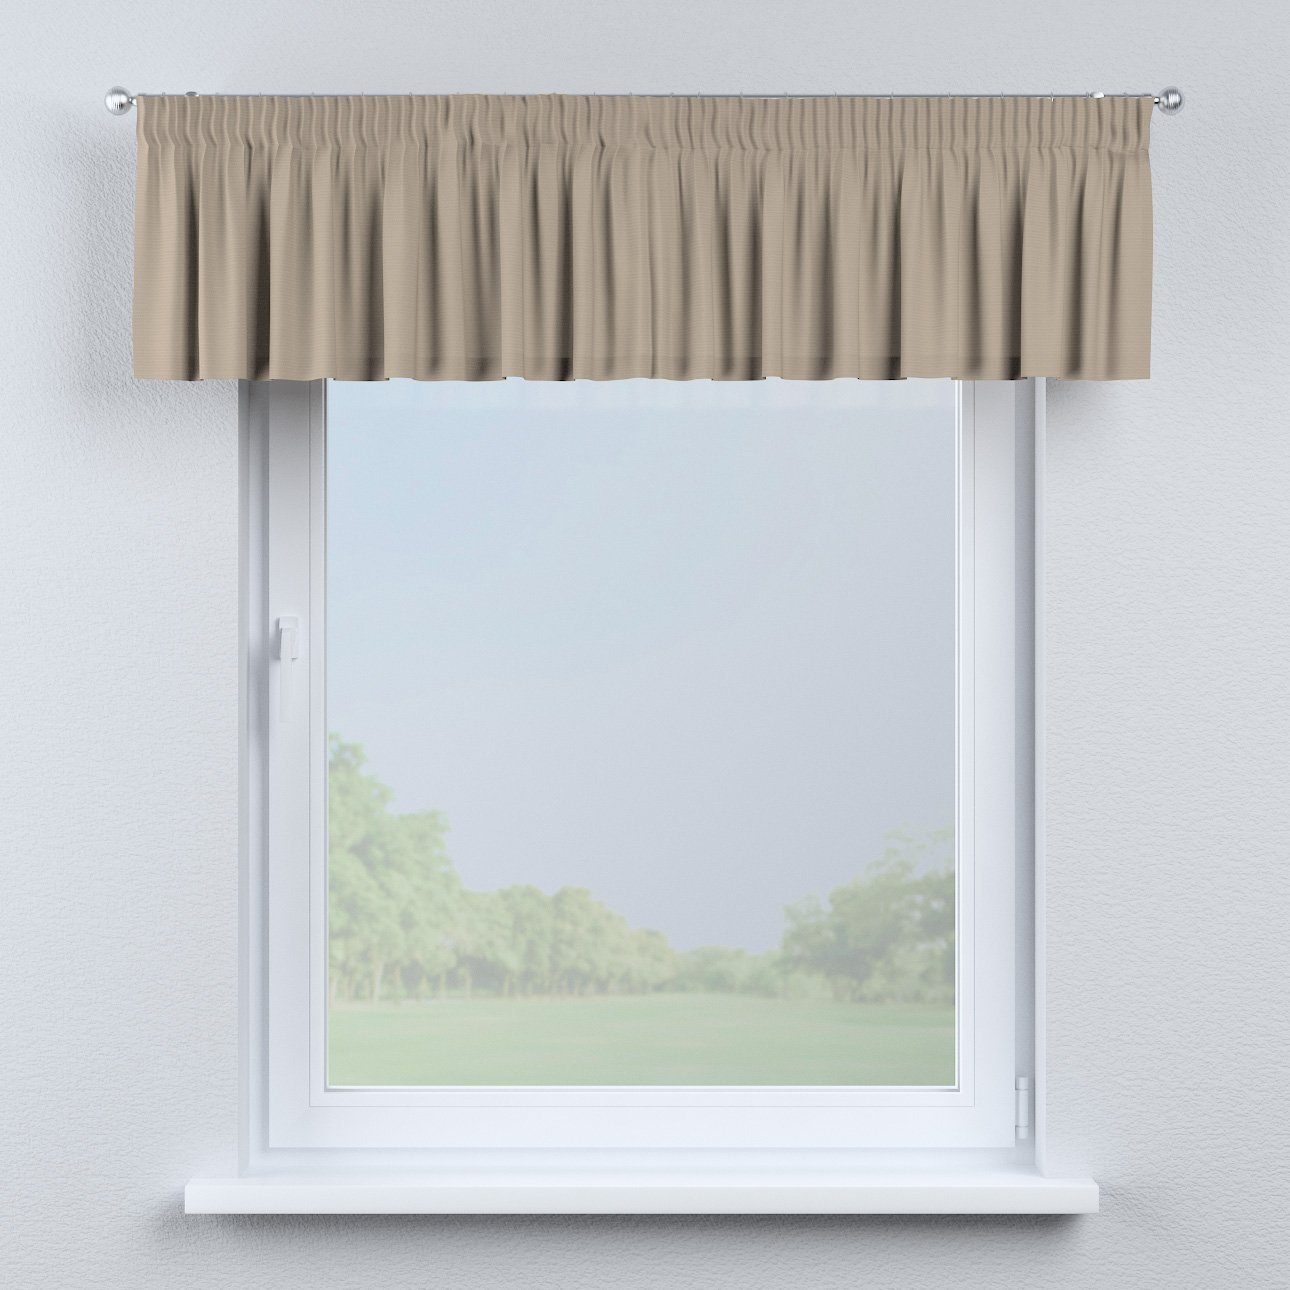 Vorhang mit Kräuselband cm, Cotton Dekoria Panama, 130 grau-braun 40 x